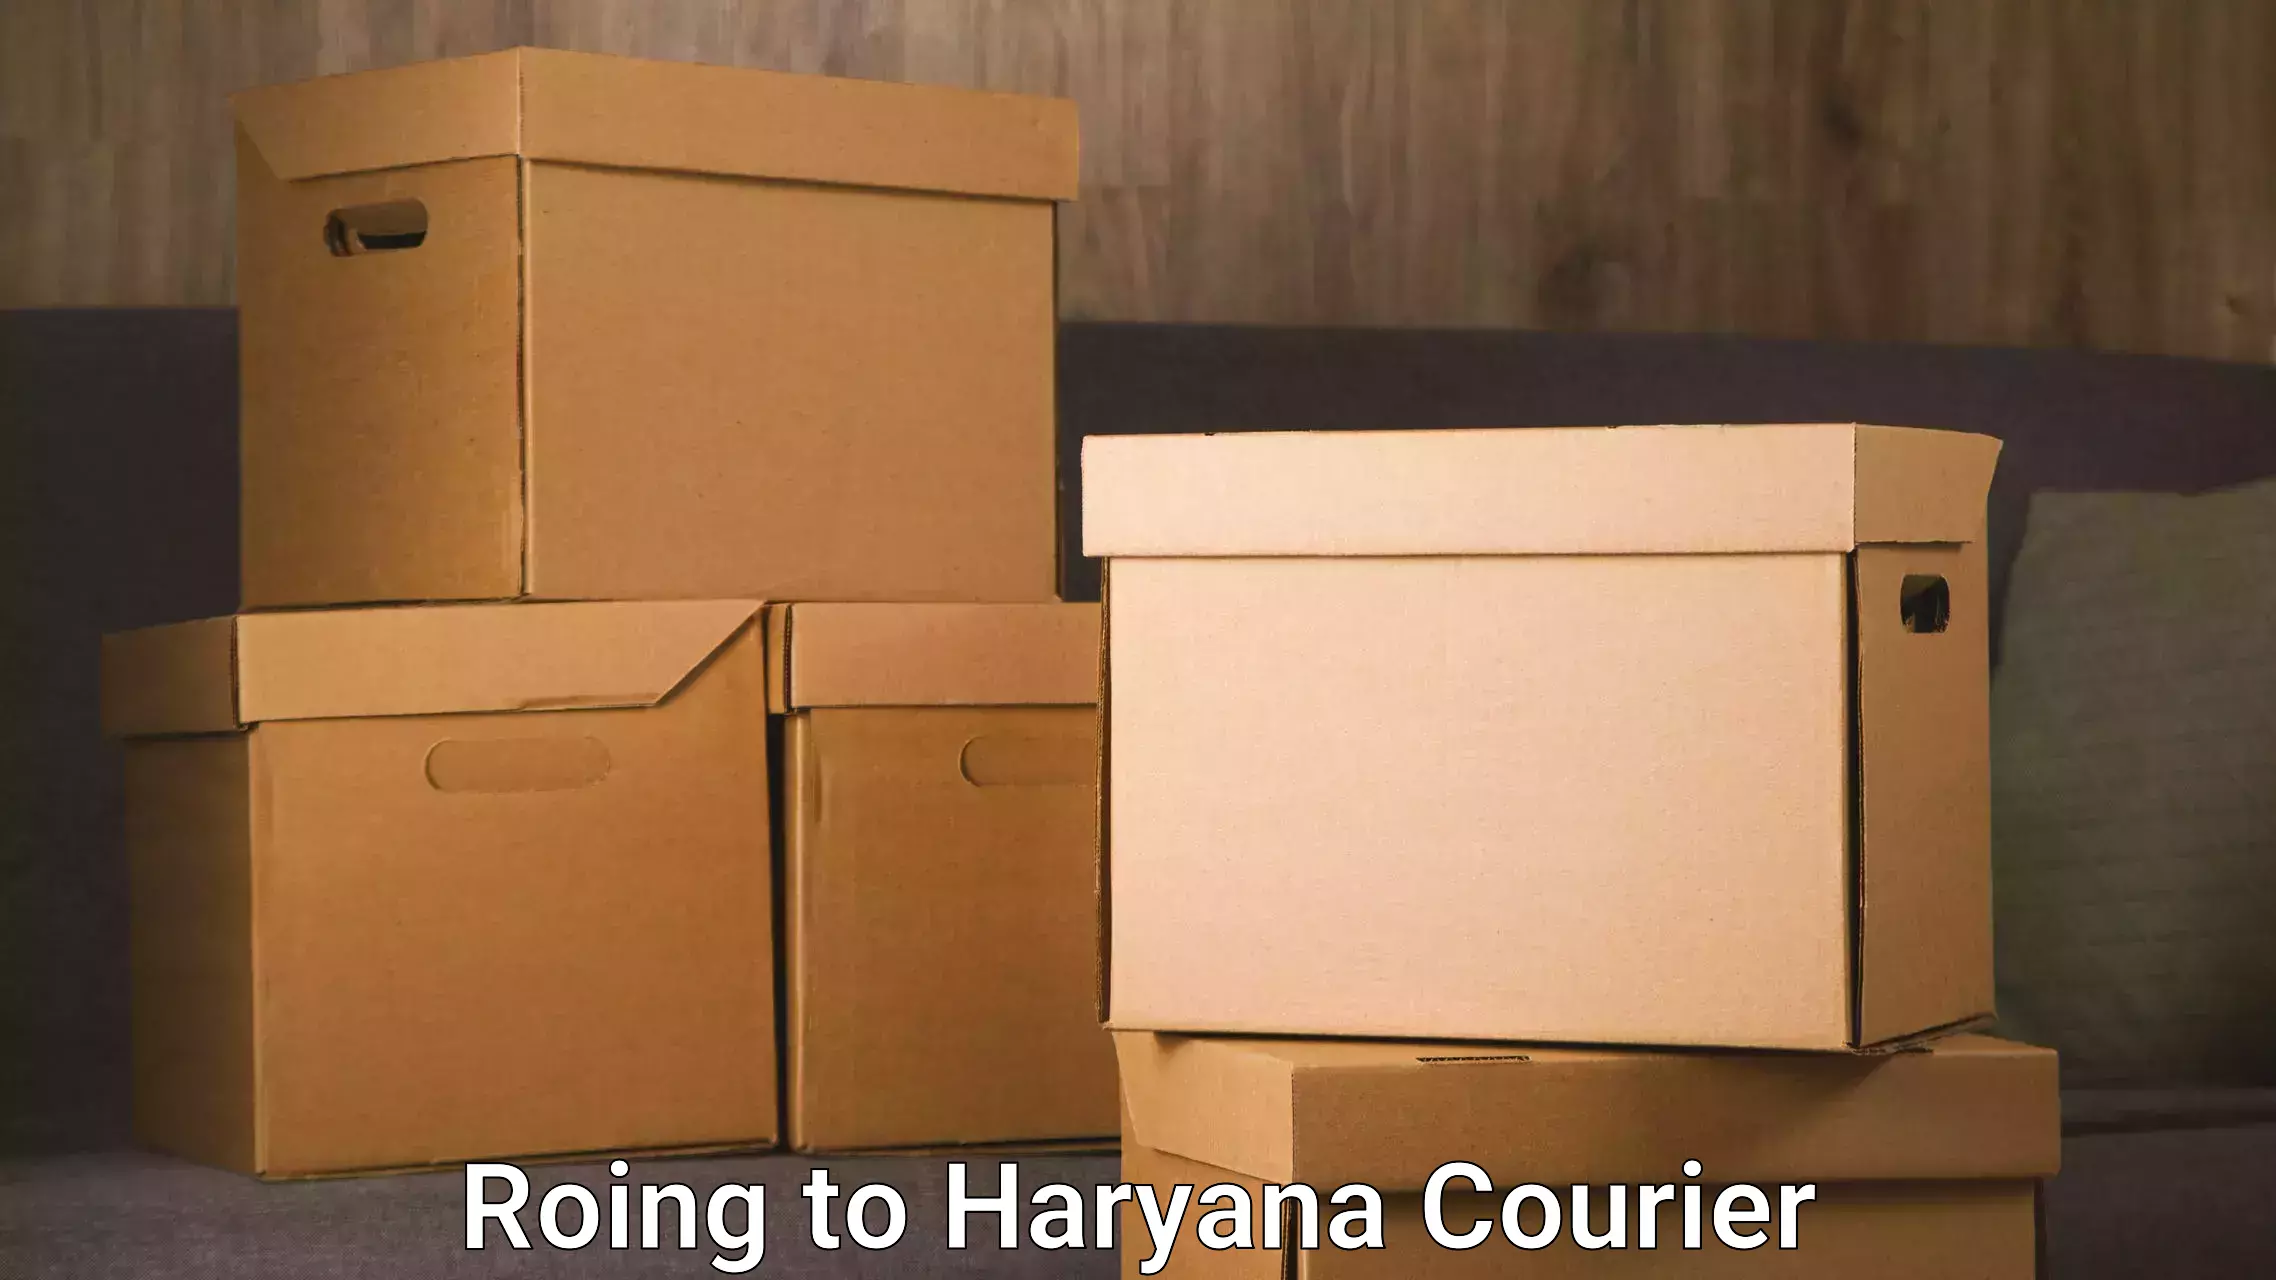 Easy return solutions Roing to Haryana